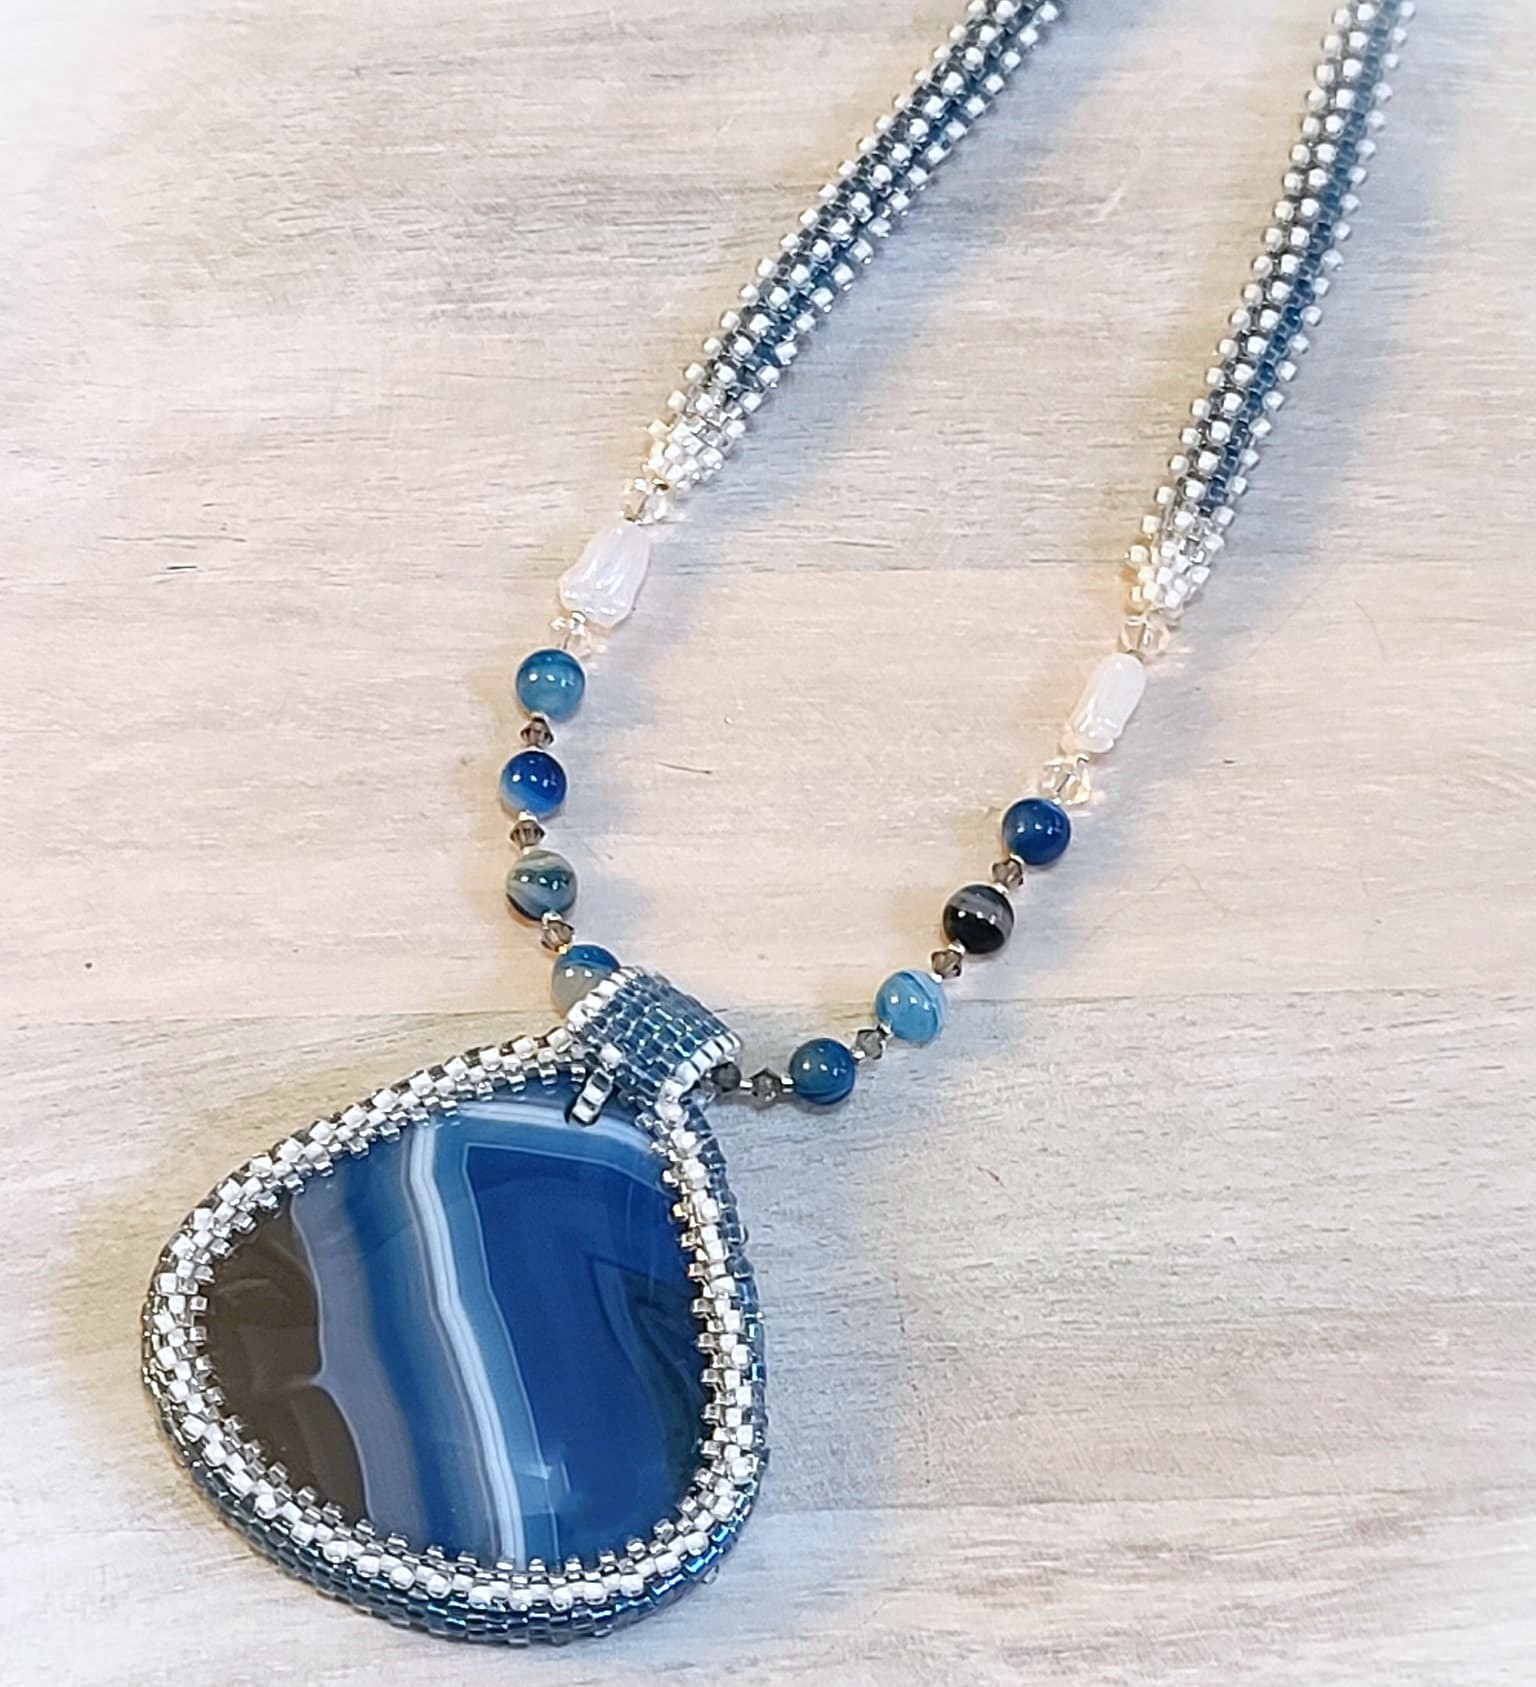 Gemstone necklace, pendant blue agate, with miyuki glass beads